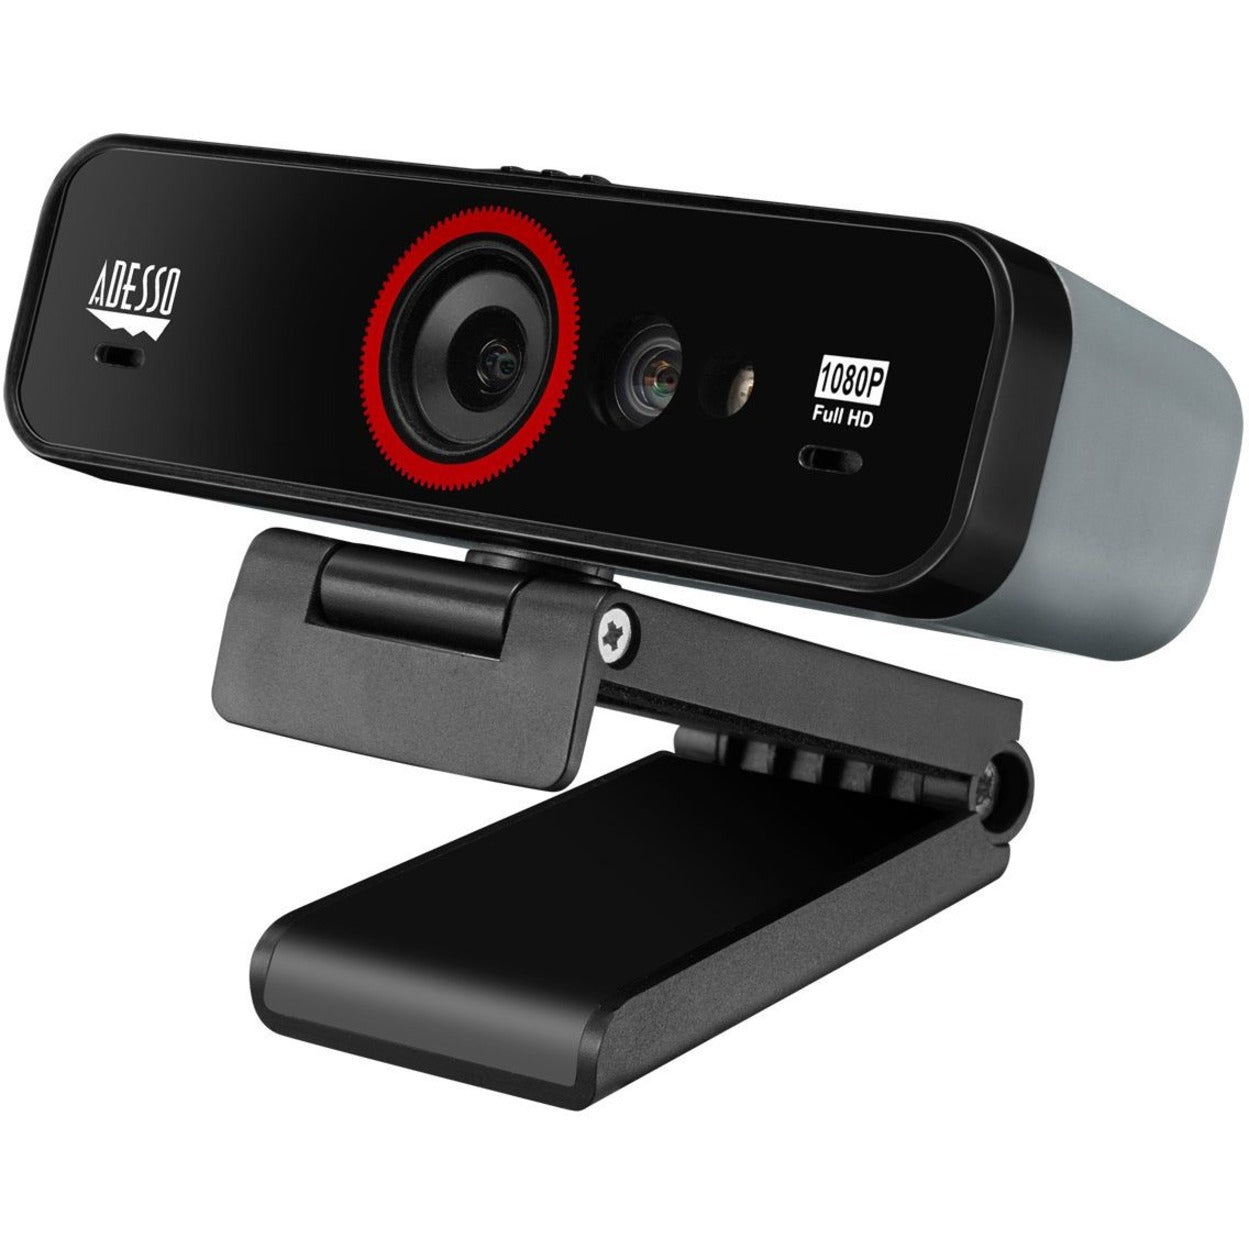 Adesso CyberTrack F1 Webcam 2.1 Megapixel, 30 fps, USB 2.0